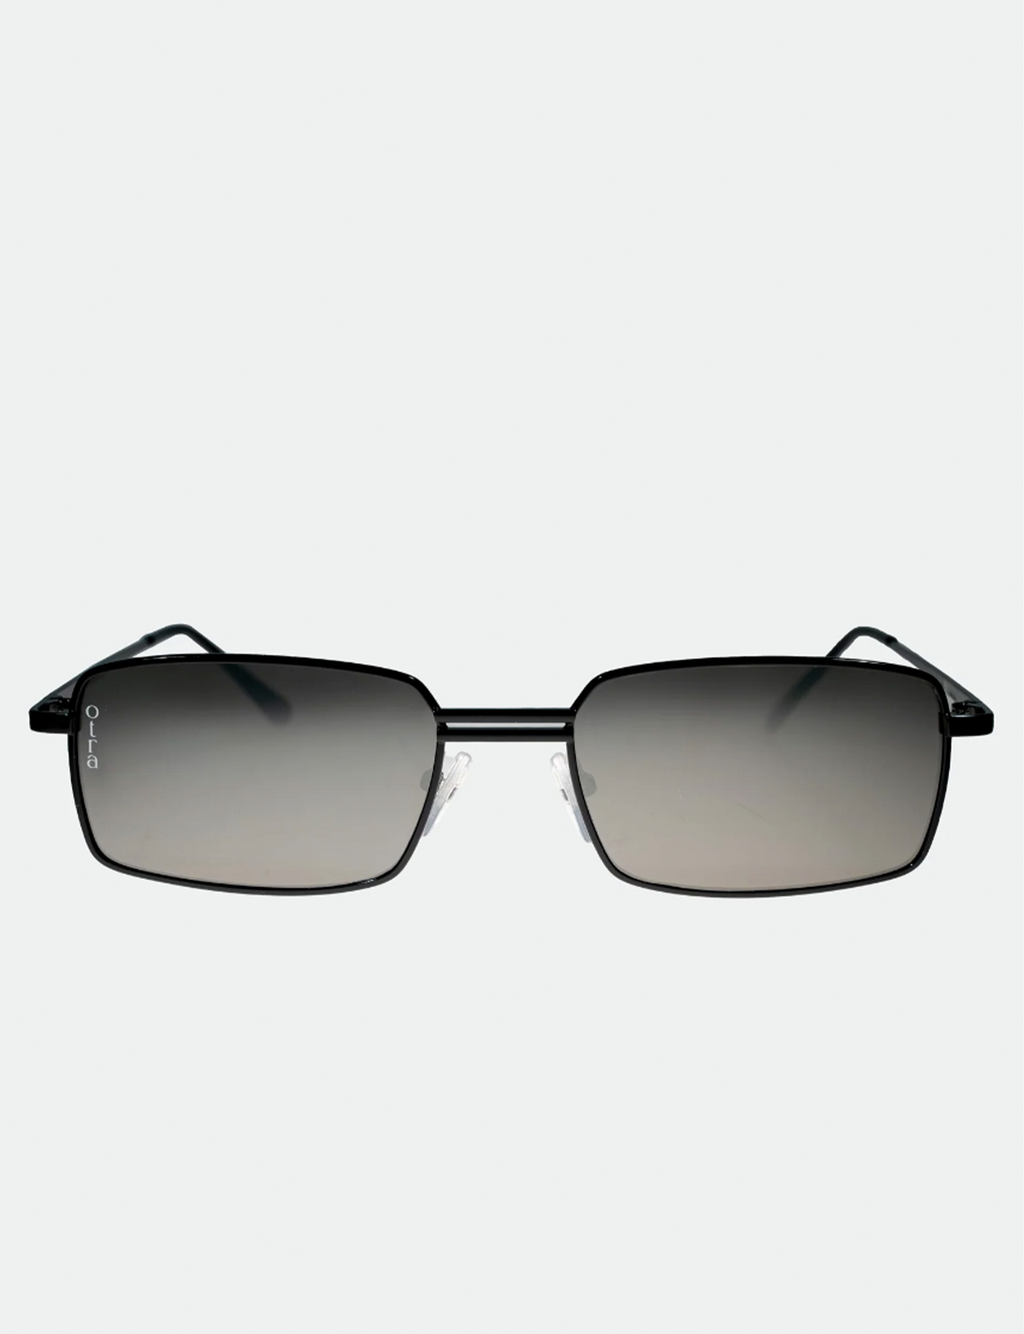 LLA Sunglasses, Black/Mirror